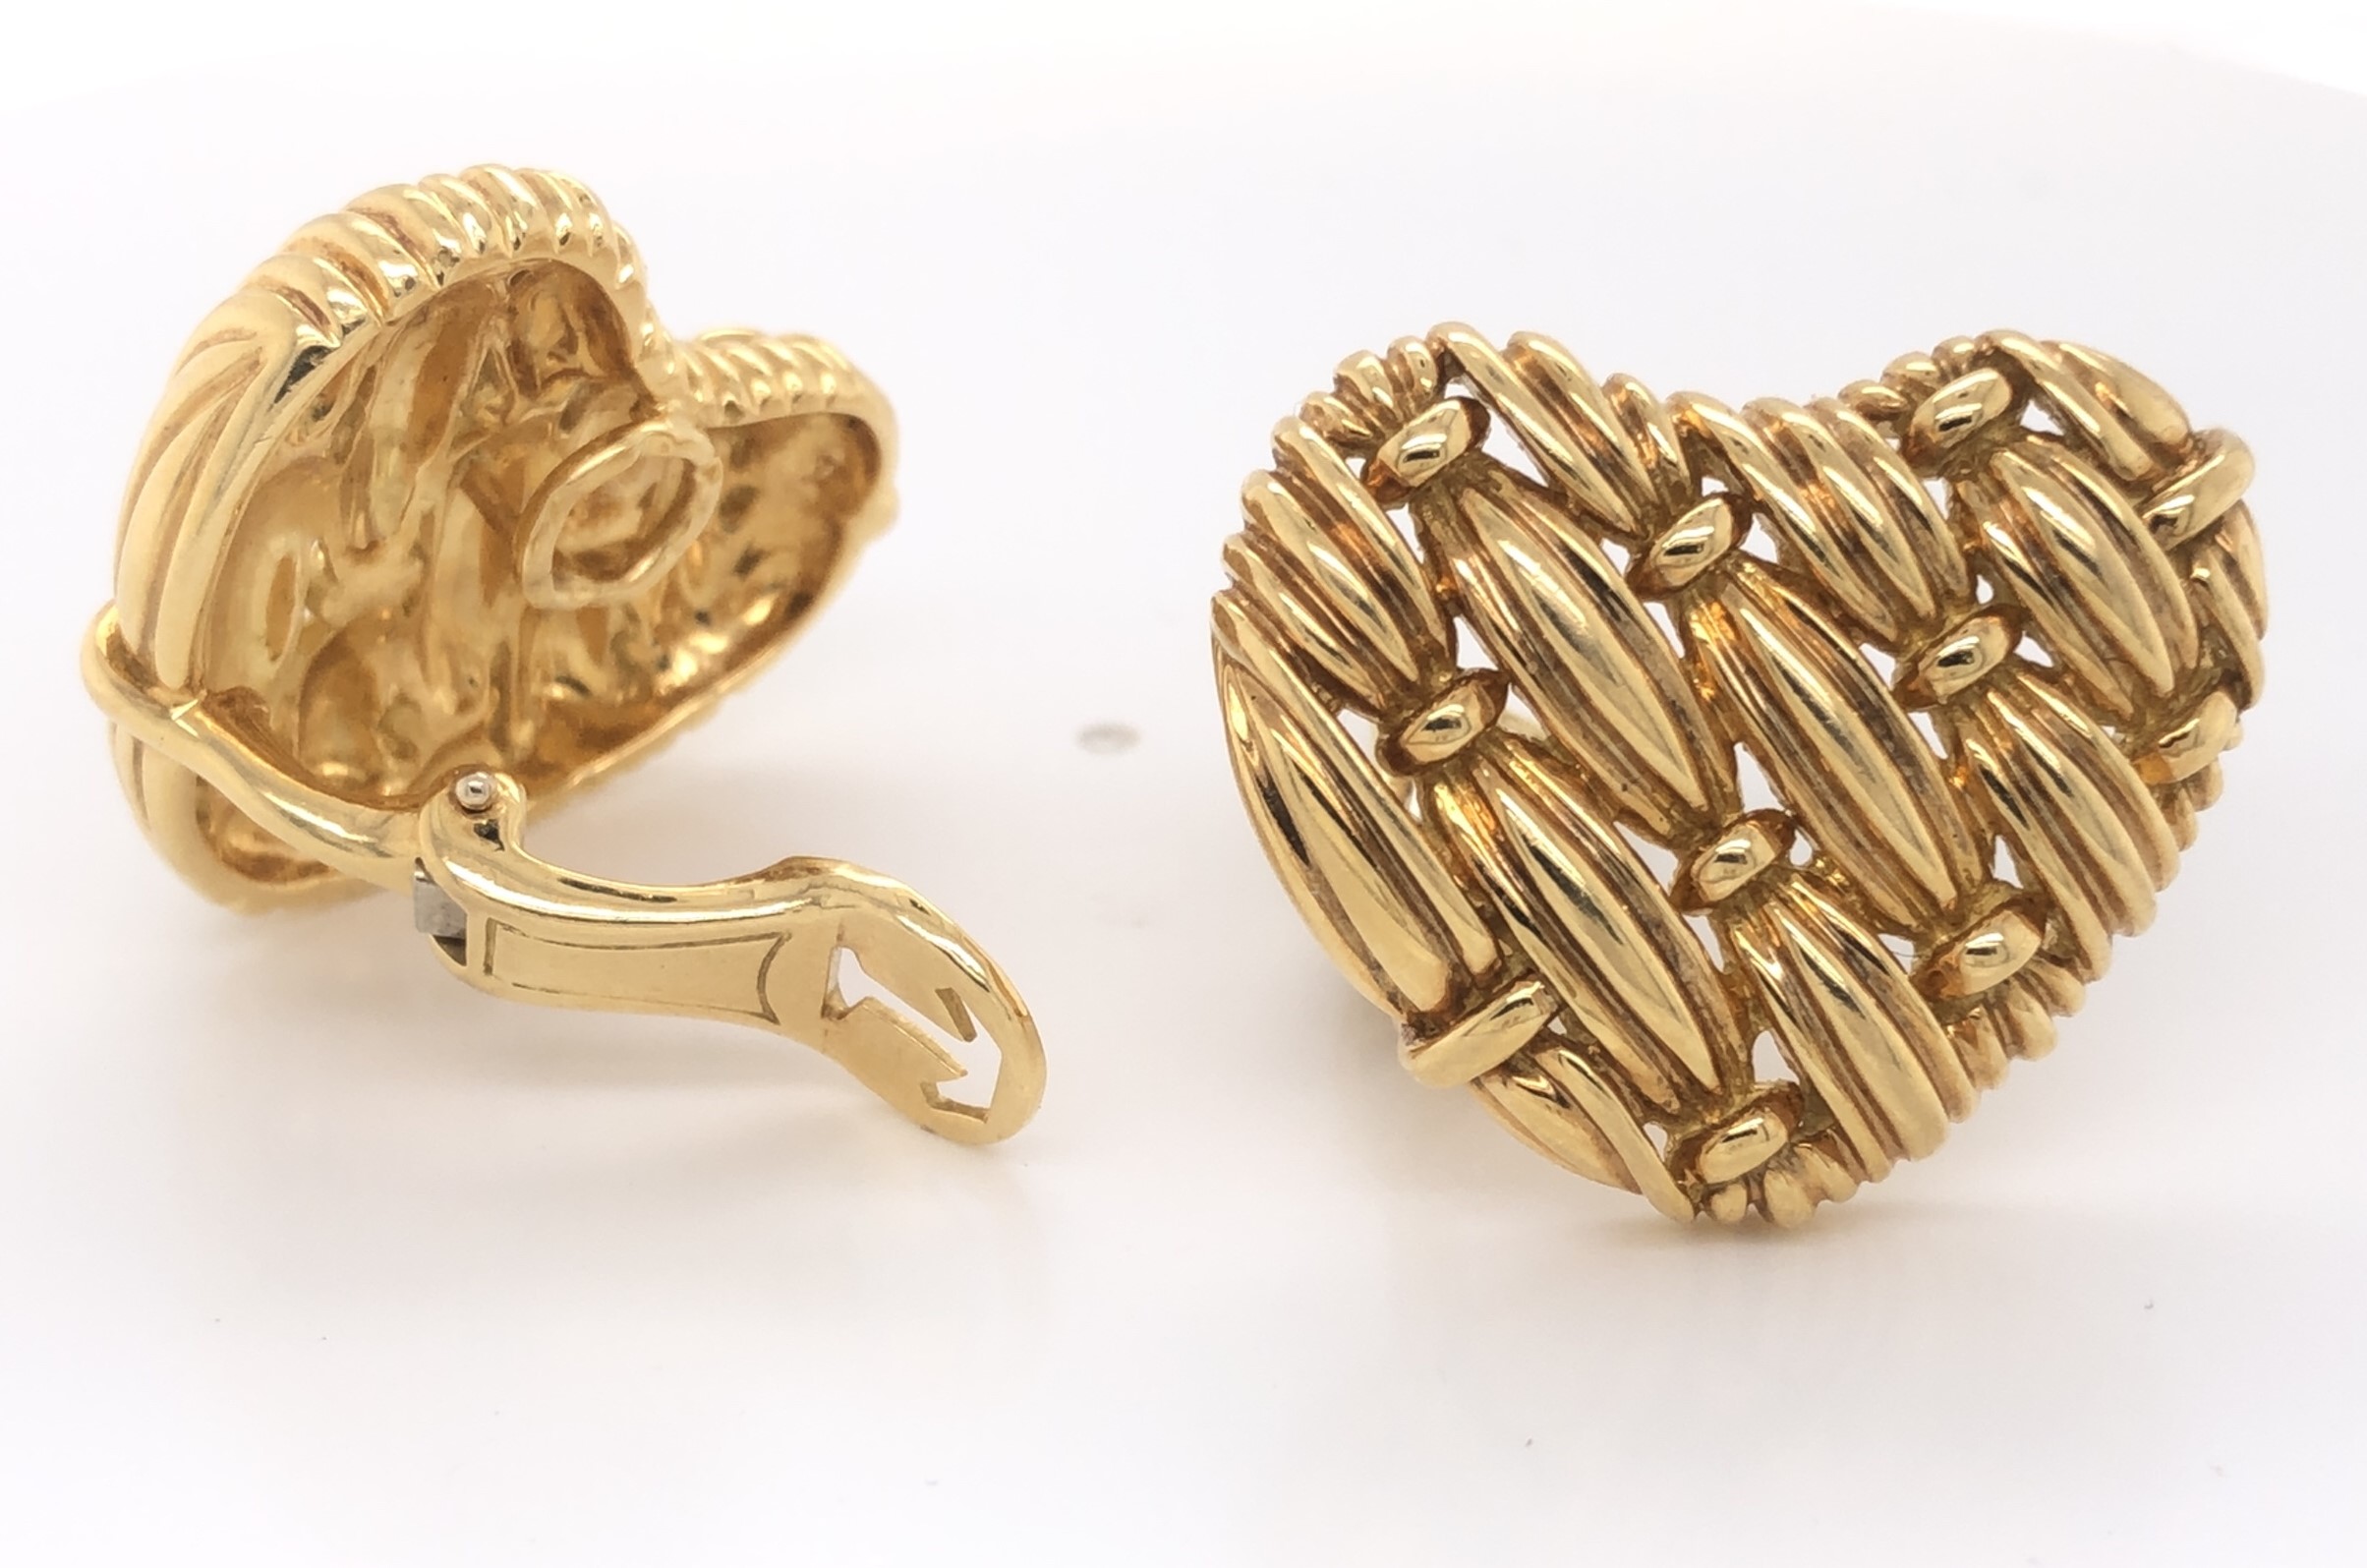 Tiffany & Co. Gold Earrings - Image 2 of 3